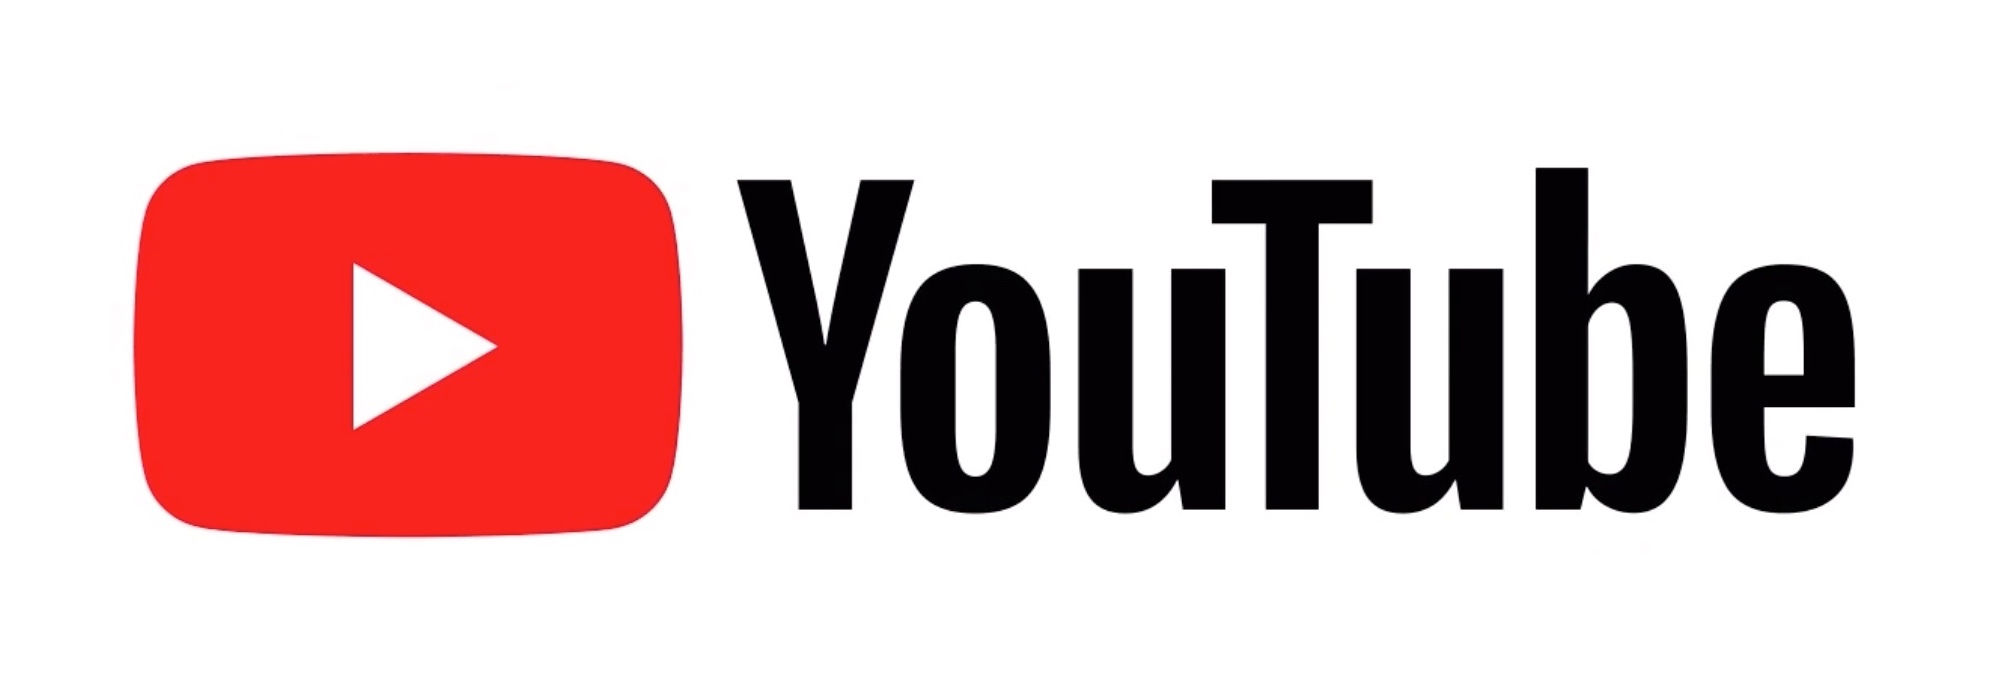 New YouTube Logo for 2017 Redesign (2017)